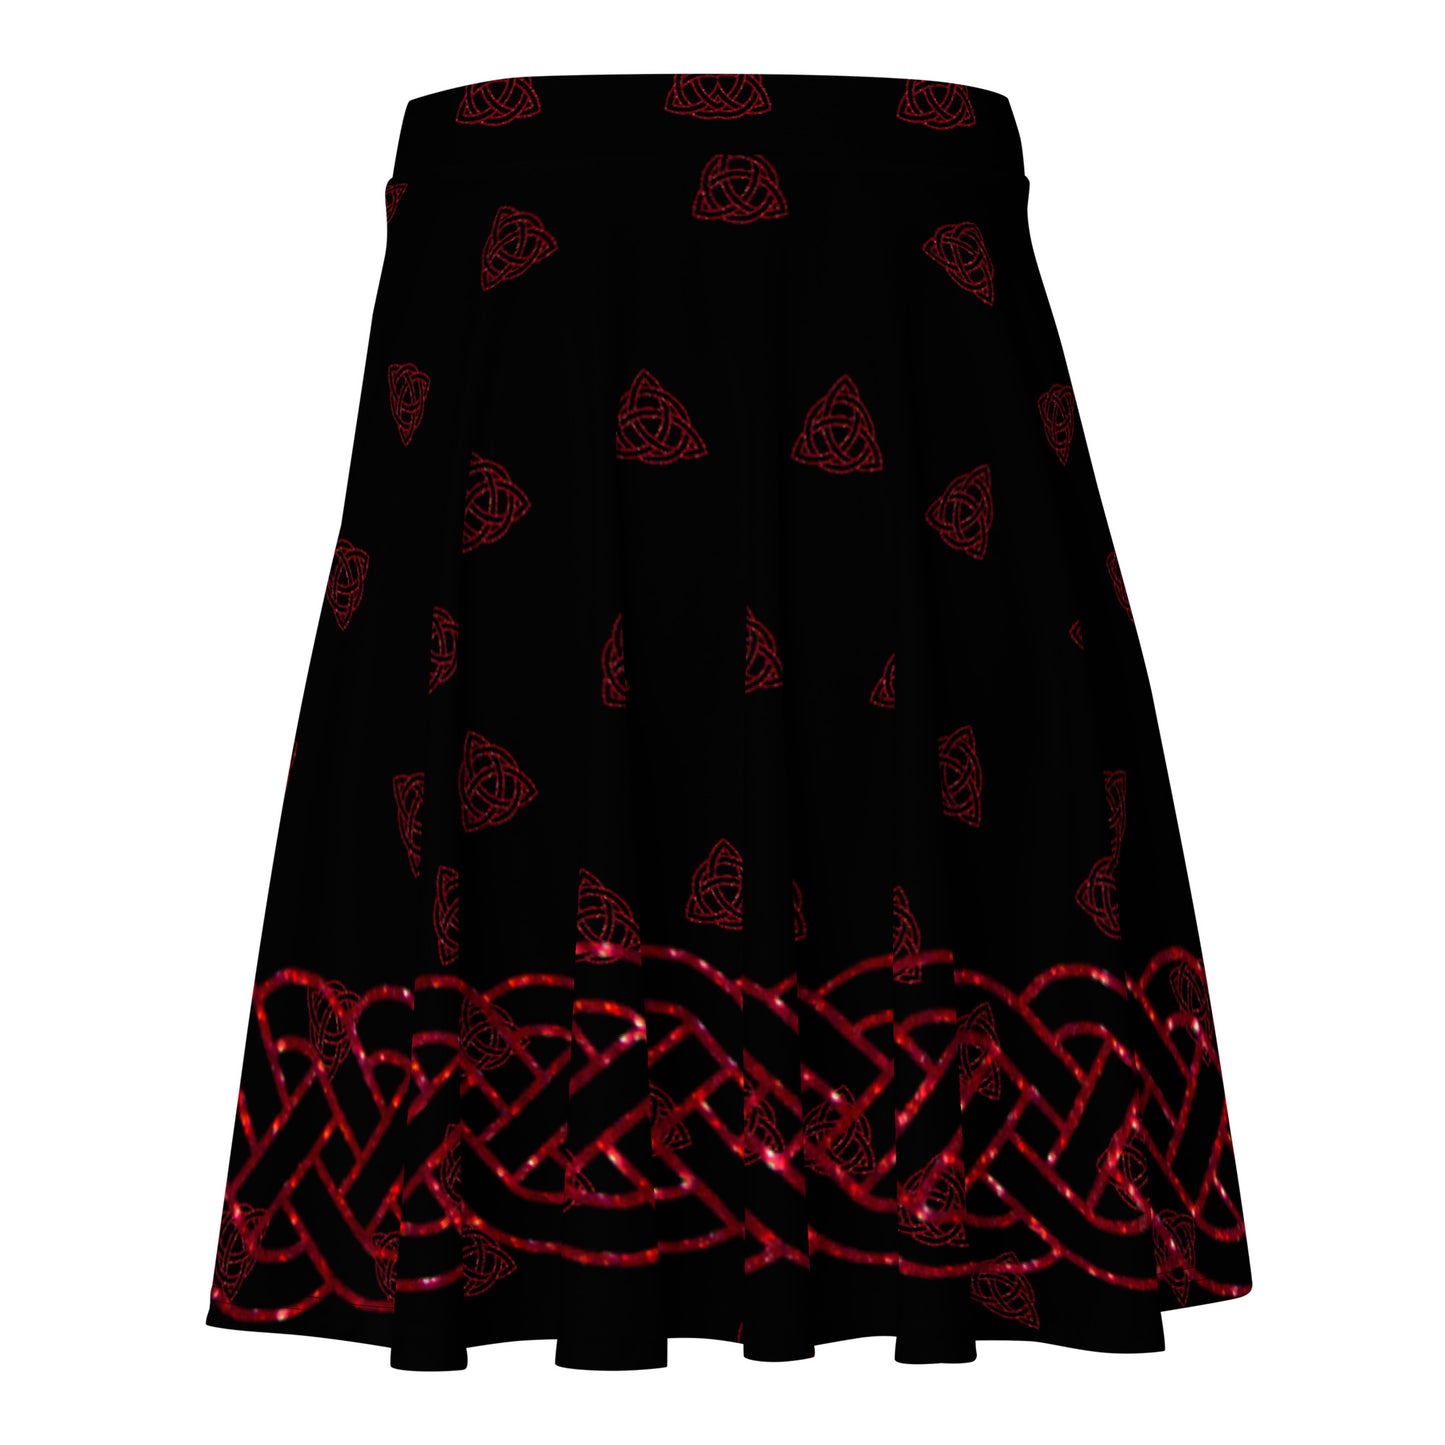 Celtic Red Wicca Skirt